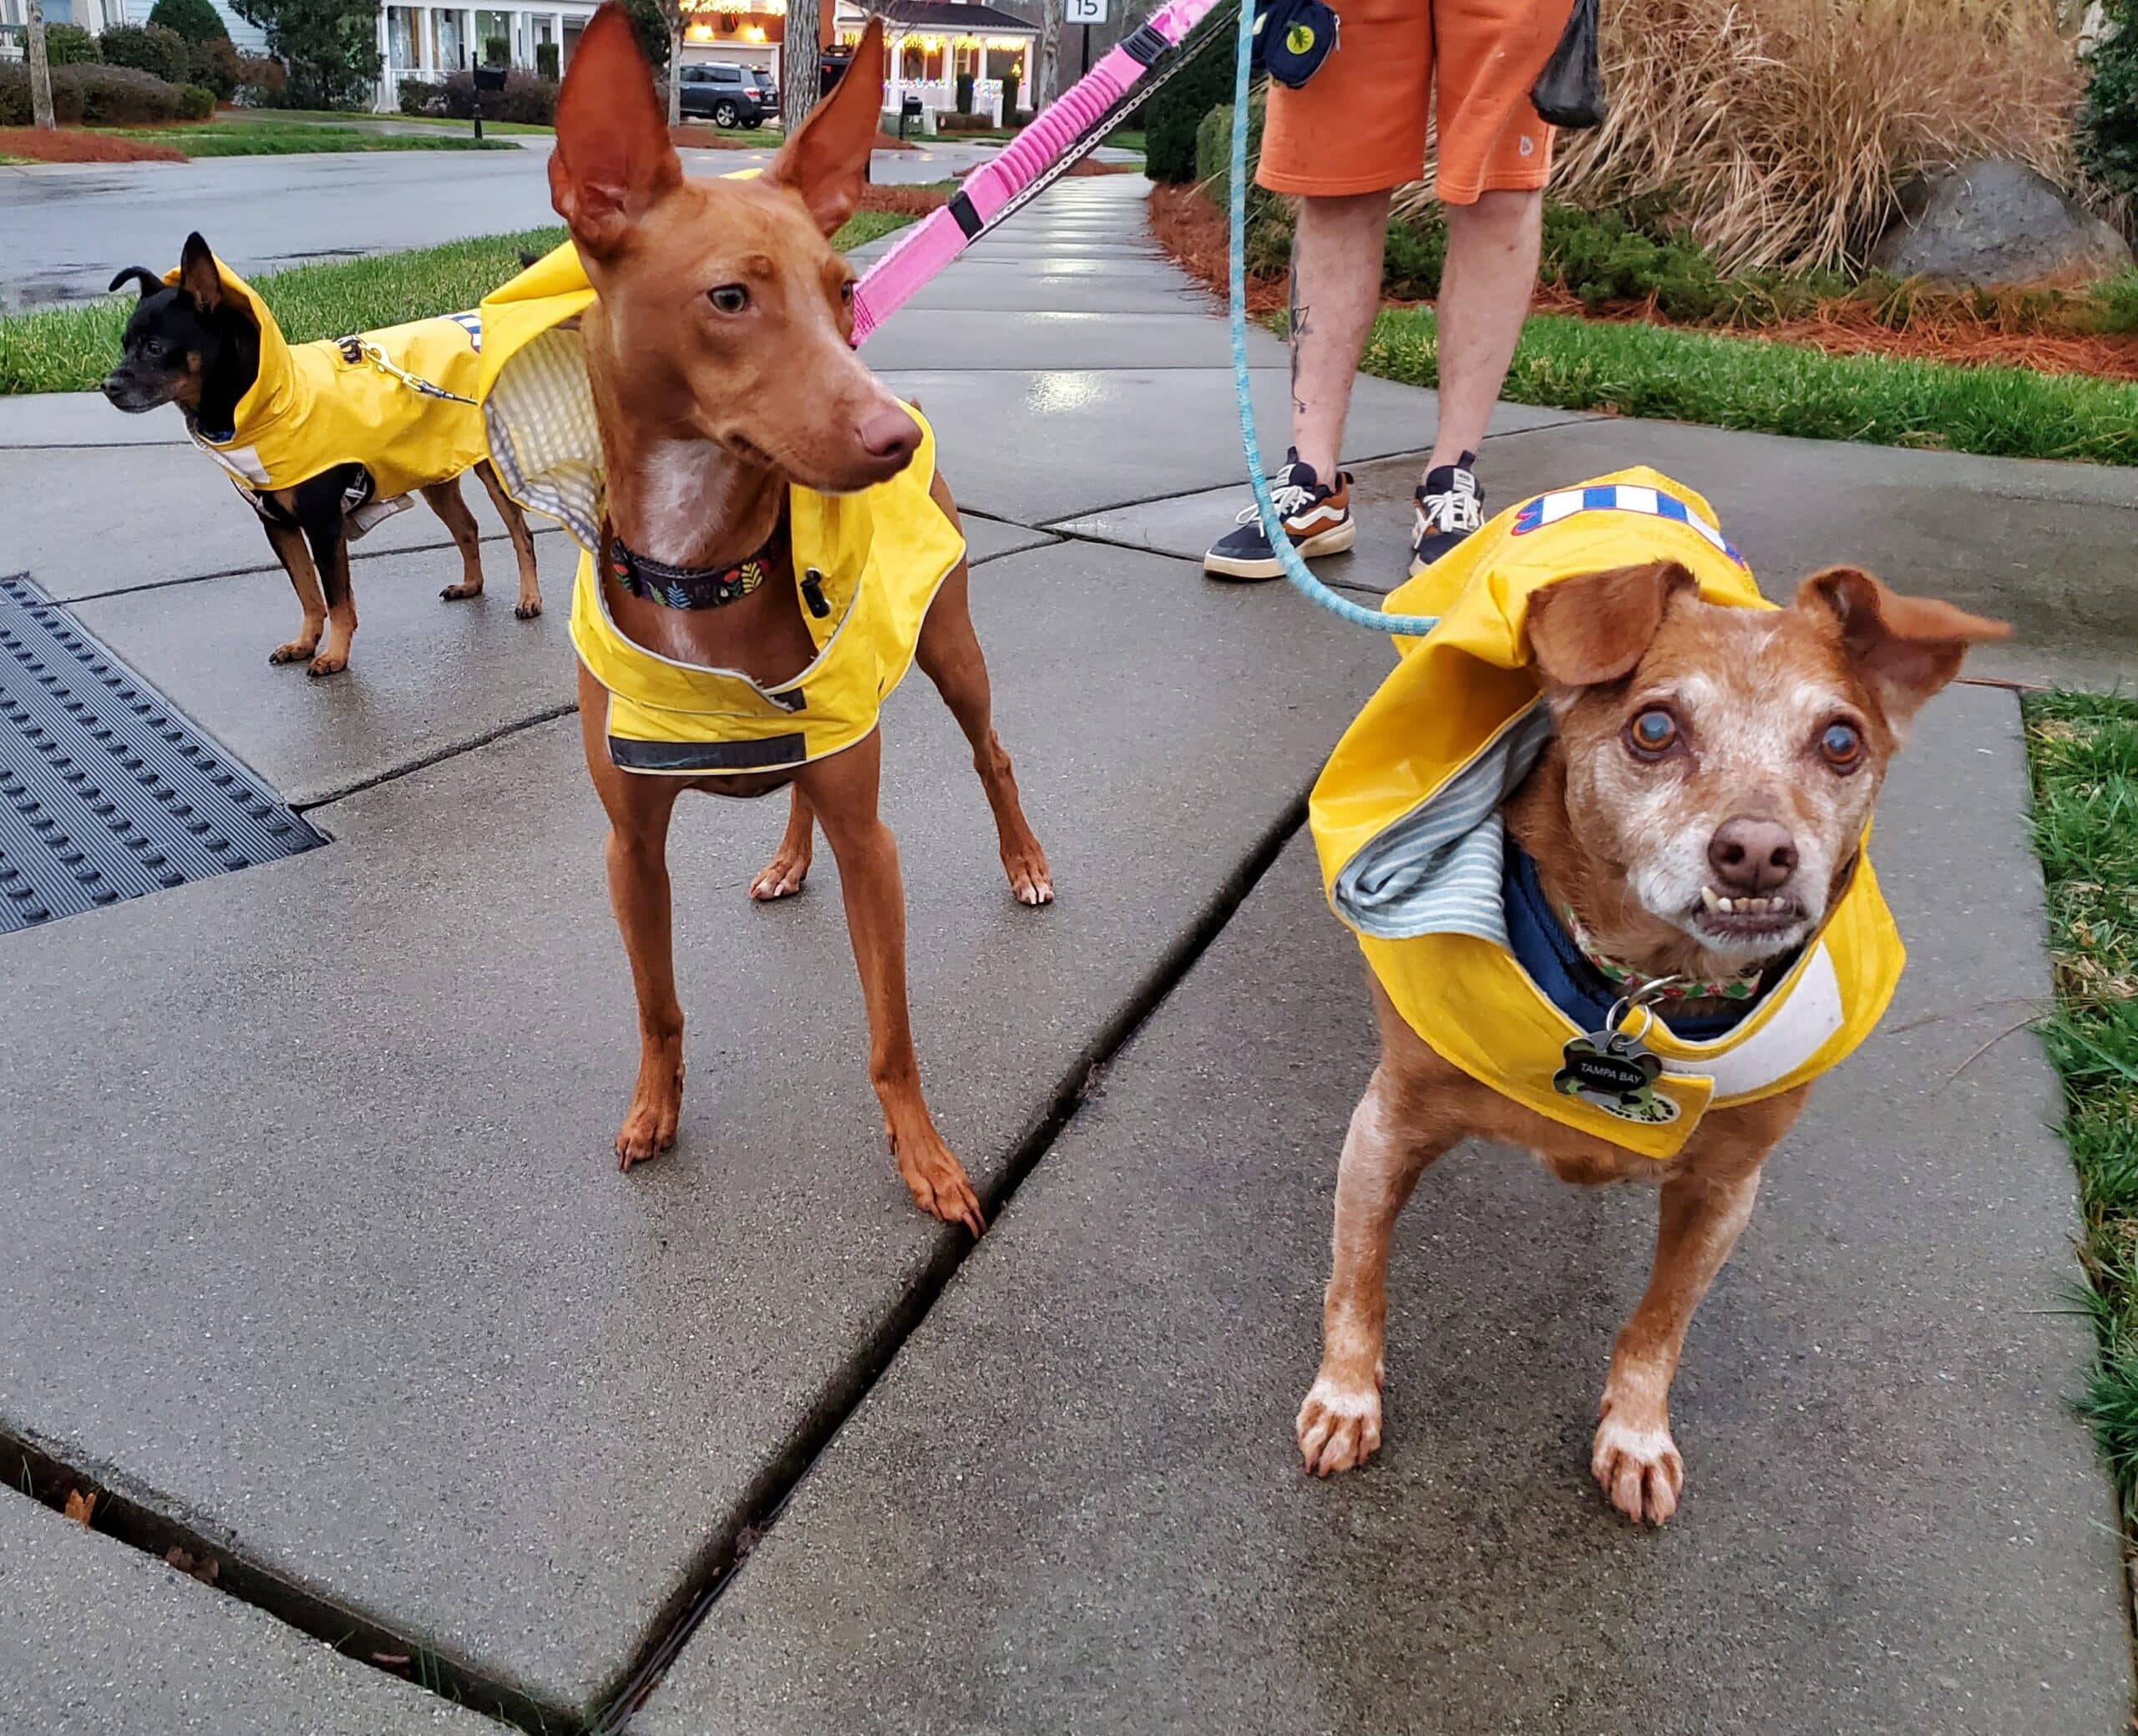 Tampa Bay Lightning Dog Jersey - Pet Costume Center